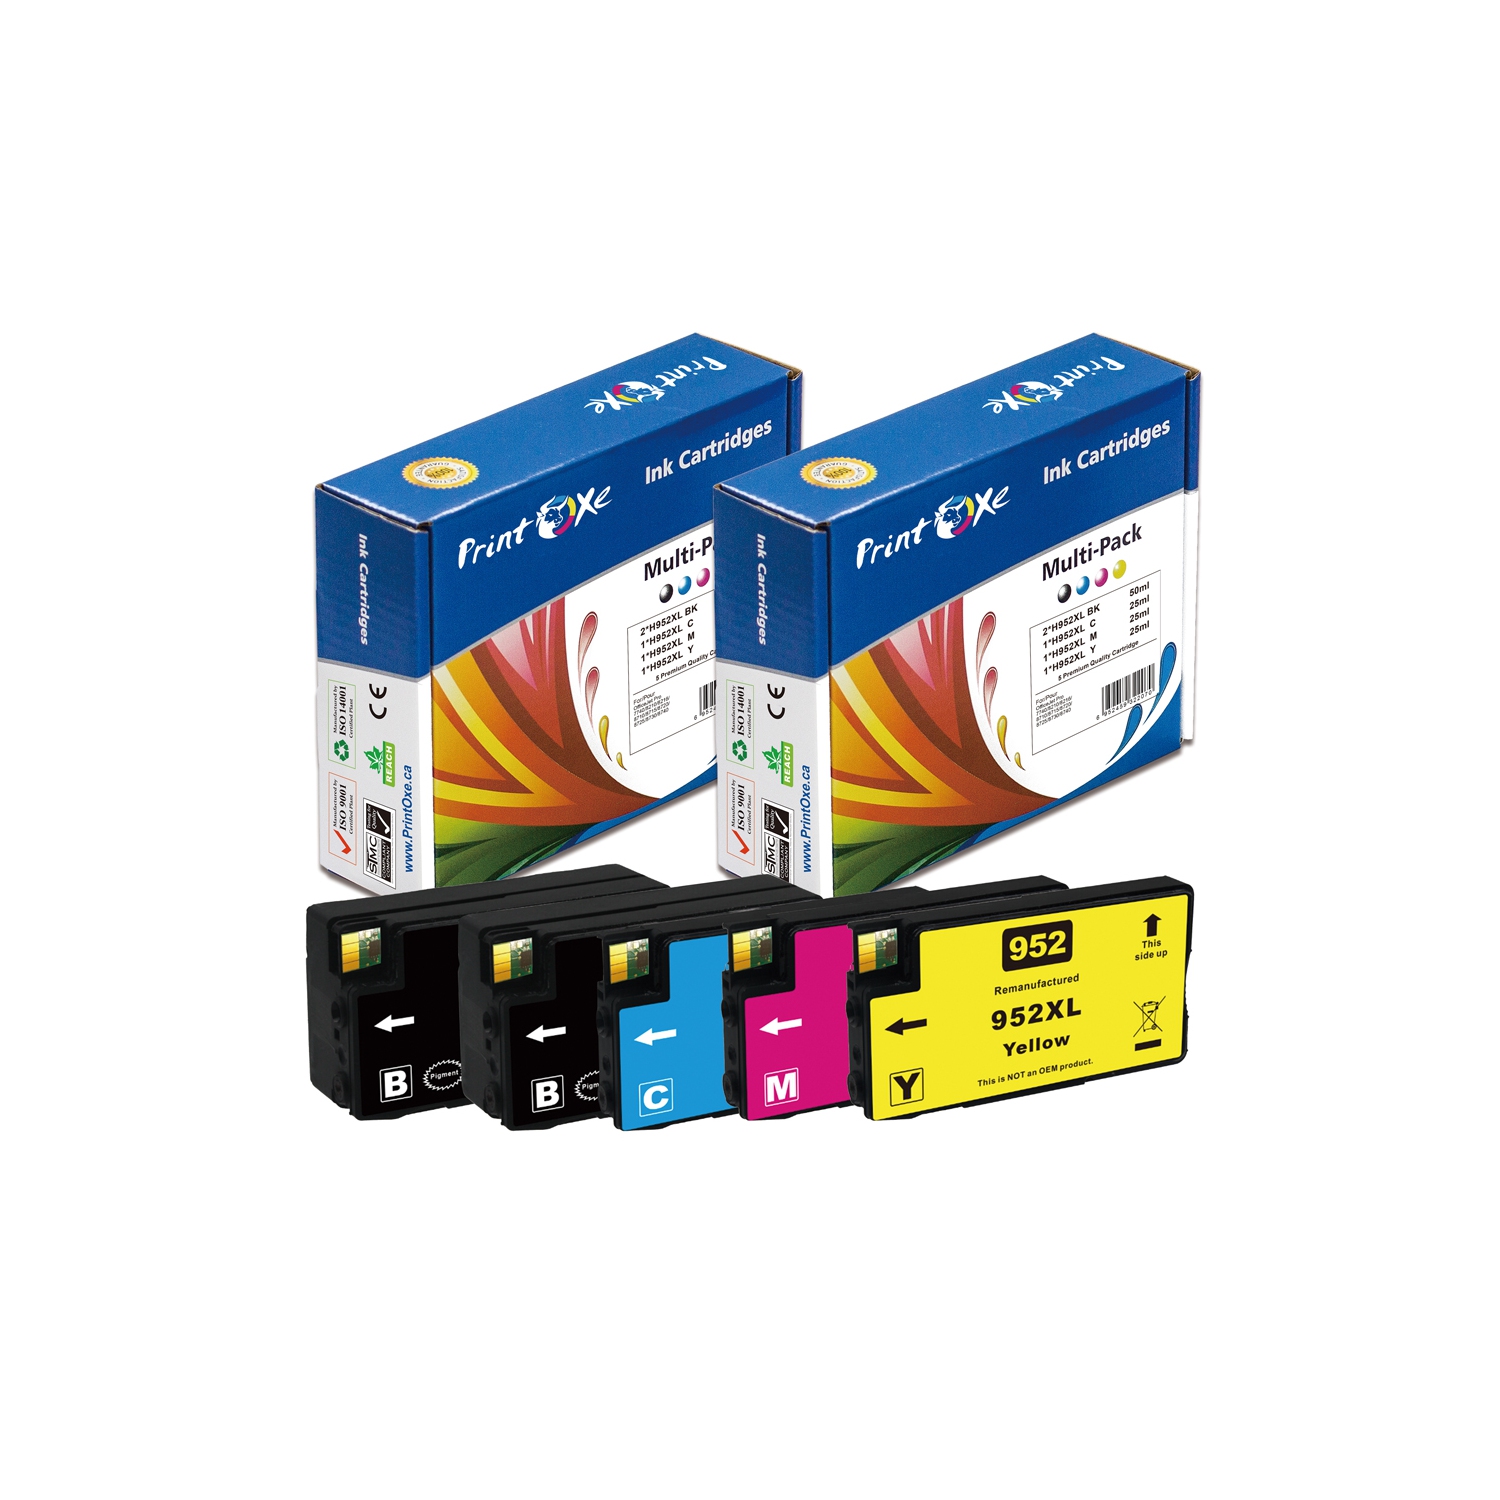 PrintOxe® 952XL Reman Set + BK of 5 Ink Cartridges High Yield 952 HP OfficeJet Pro 7740 8210 8216 8710 8715 8720 8725 8730